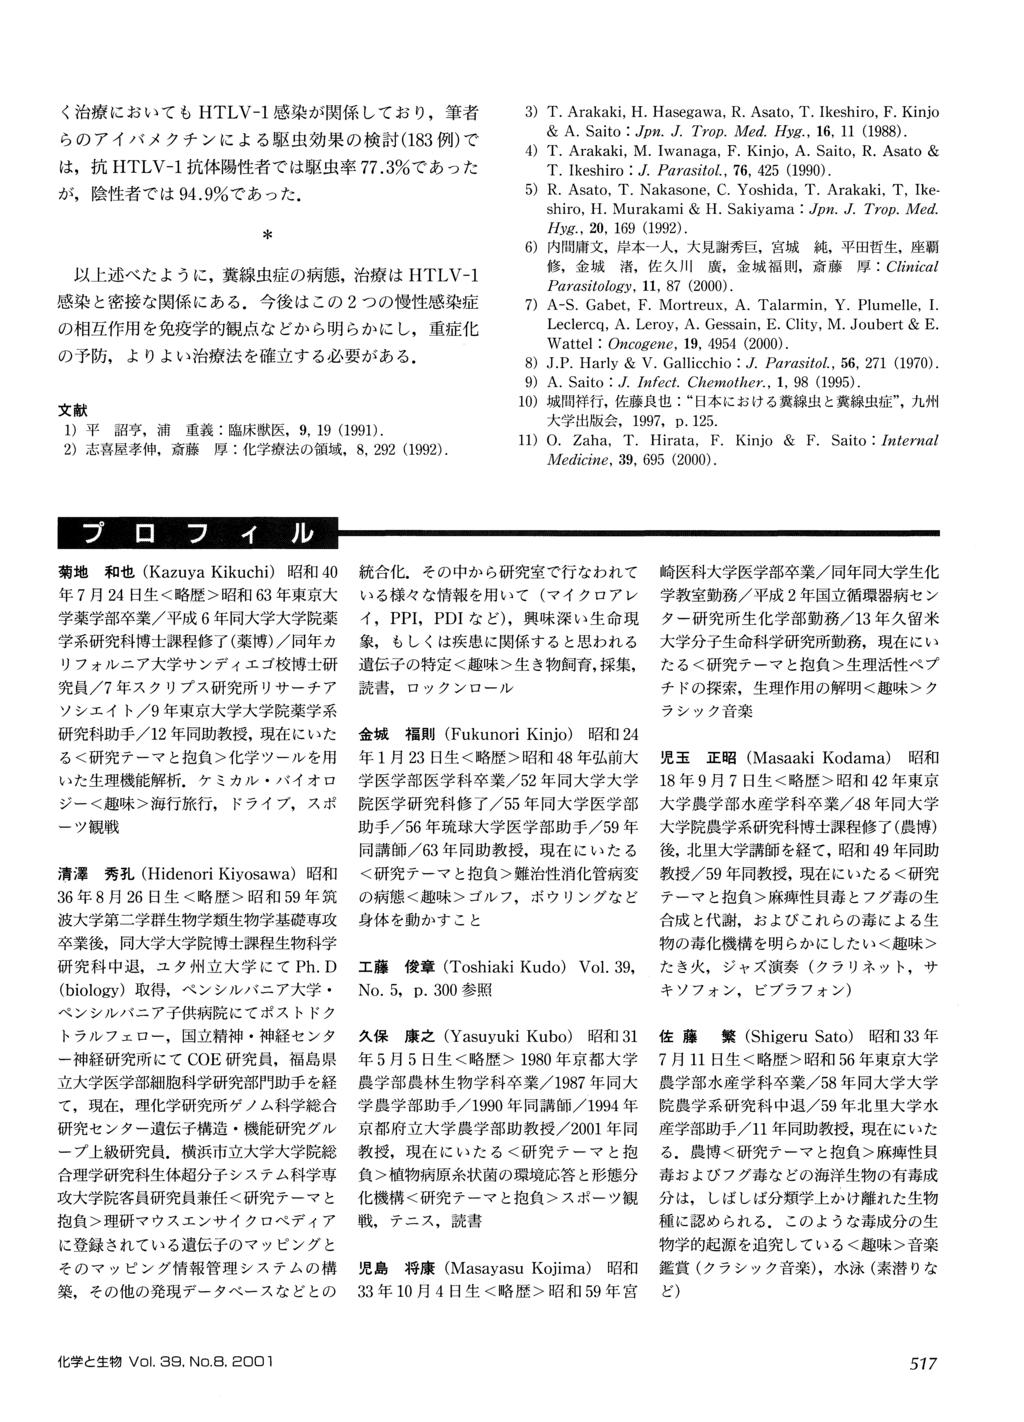 3) T. Arakaki, H. Hasegawa, R. Asato, T. Ikeshiro, F. Kinjo & A. Saito: Jpn. J. Trop. Med. Hyg., 16, 11 (1988). 4) T. Arakaki, M. Iwanaga, F. Kinjo, A. Saito, R. Asato & T. Ikeshiro: J. Parasitol.